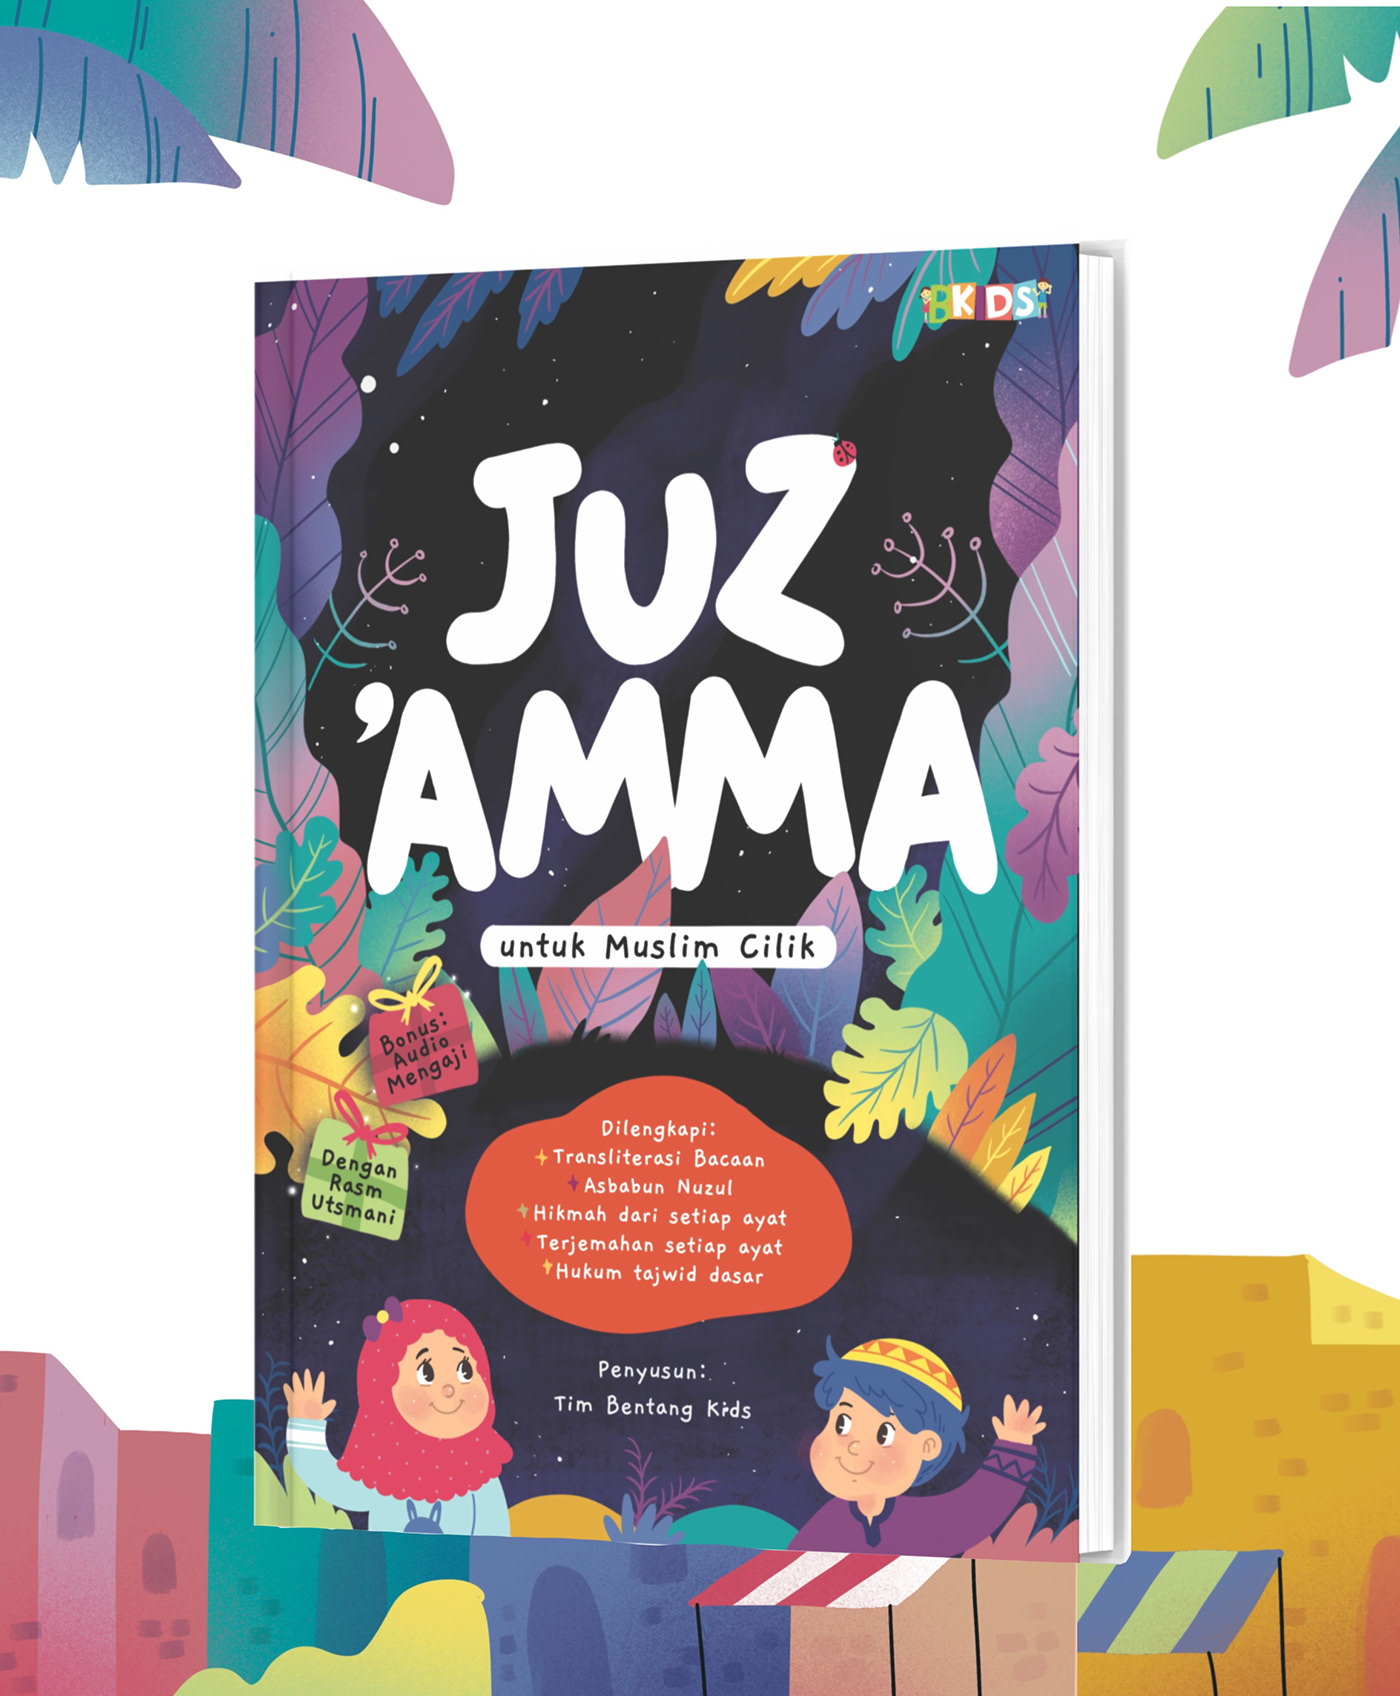 ILLUSTRATION  childrens book Picture book publishing   kid lit art Juzz 30